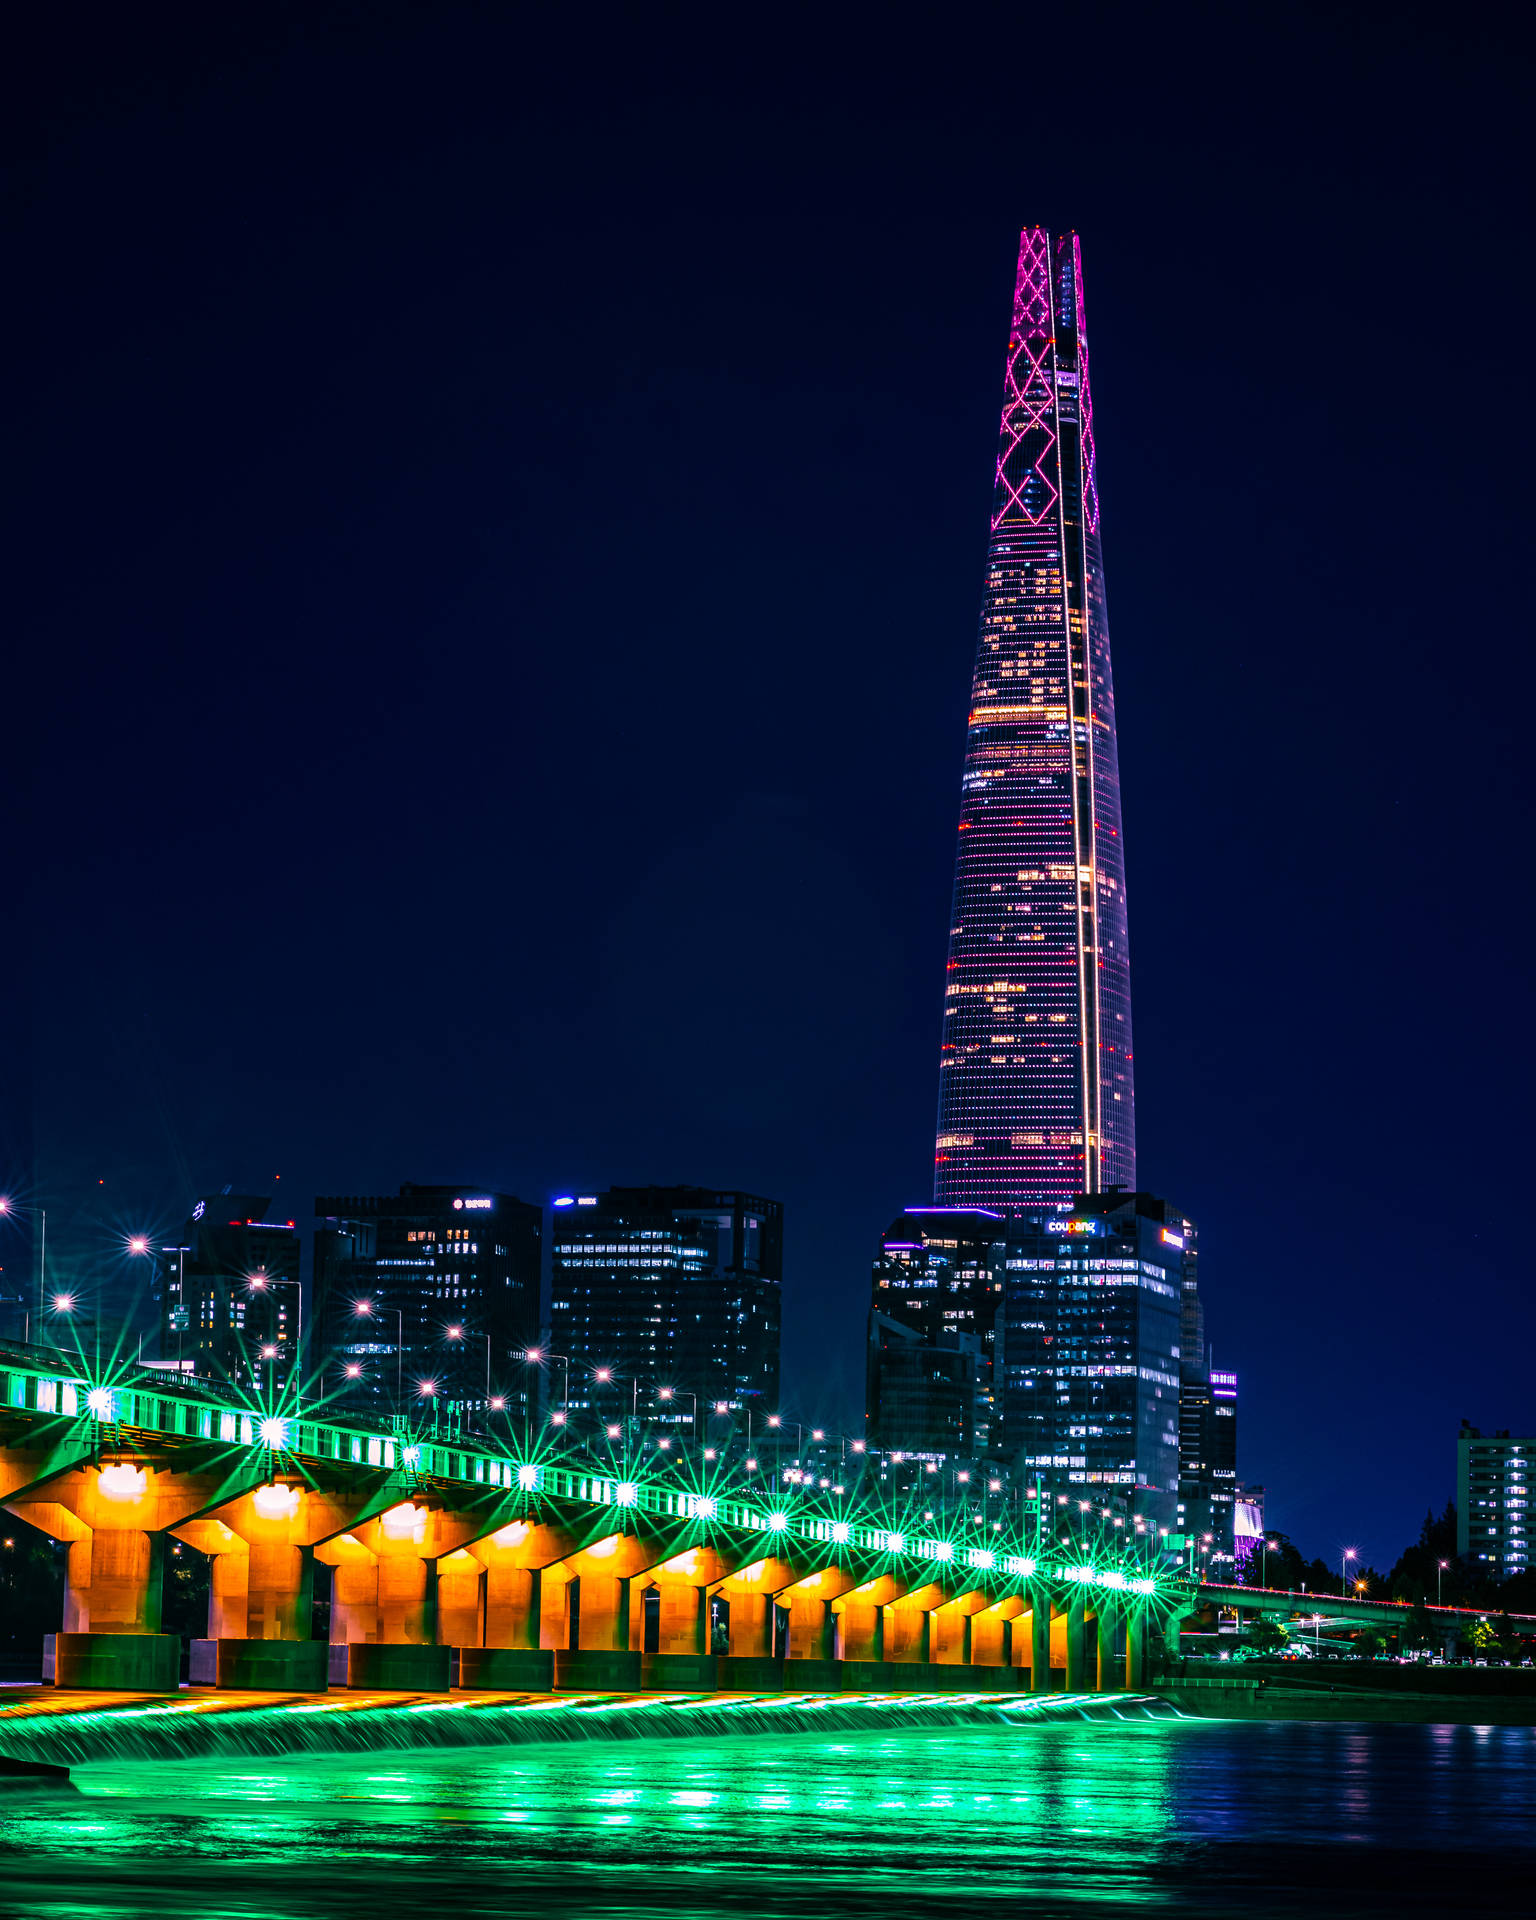 Seoul Lotte World Tower Wallpaper